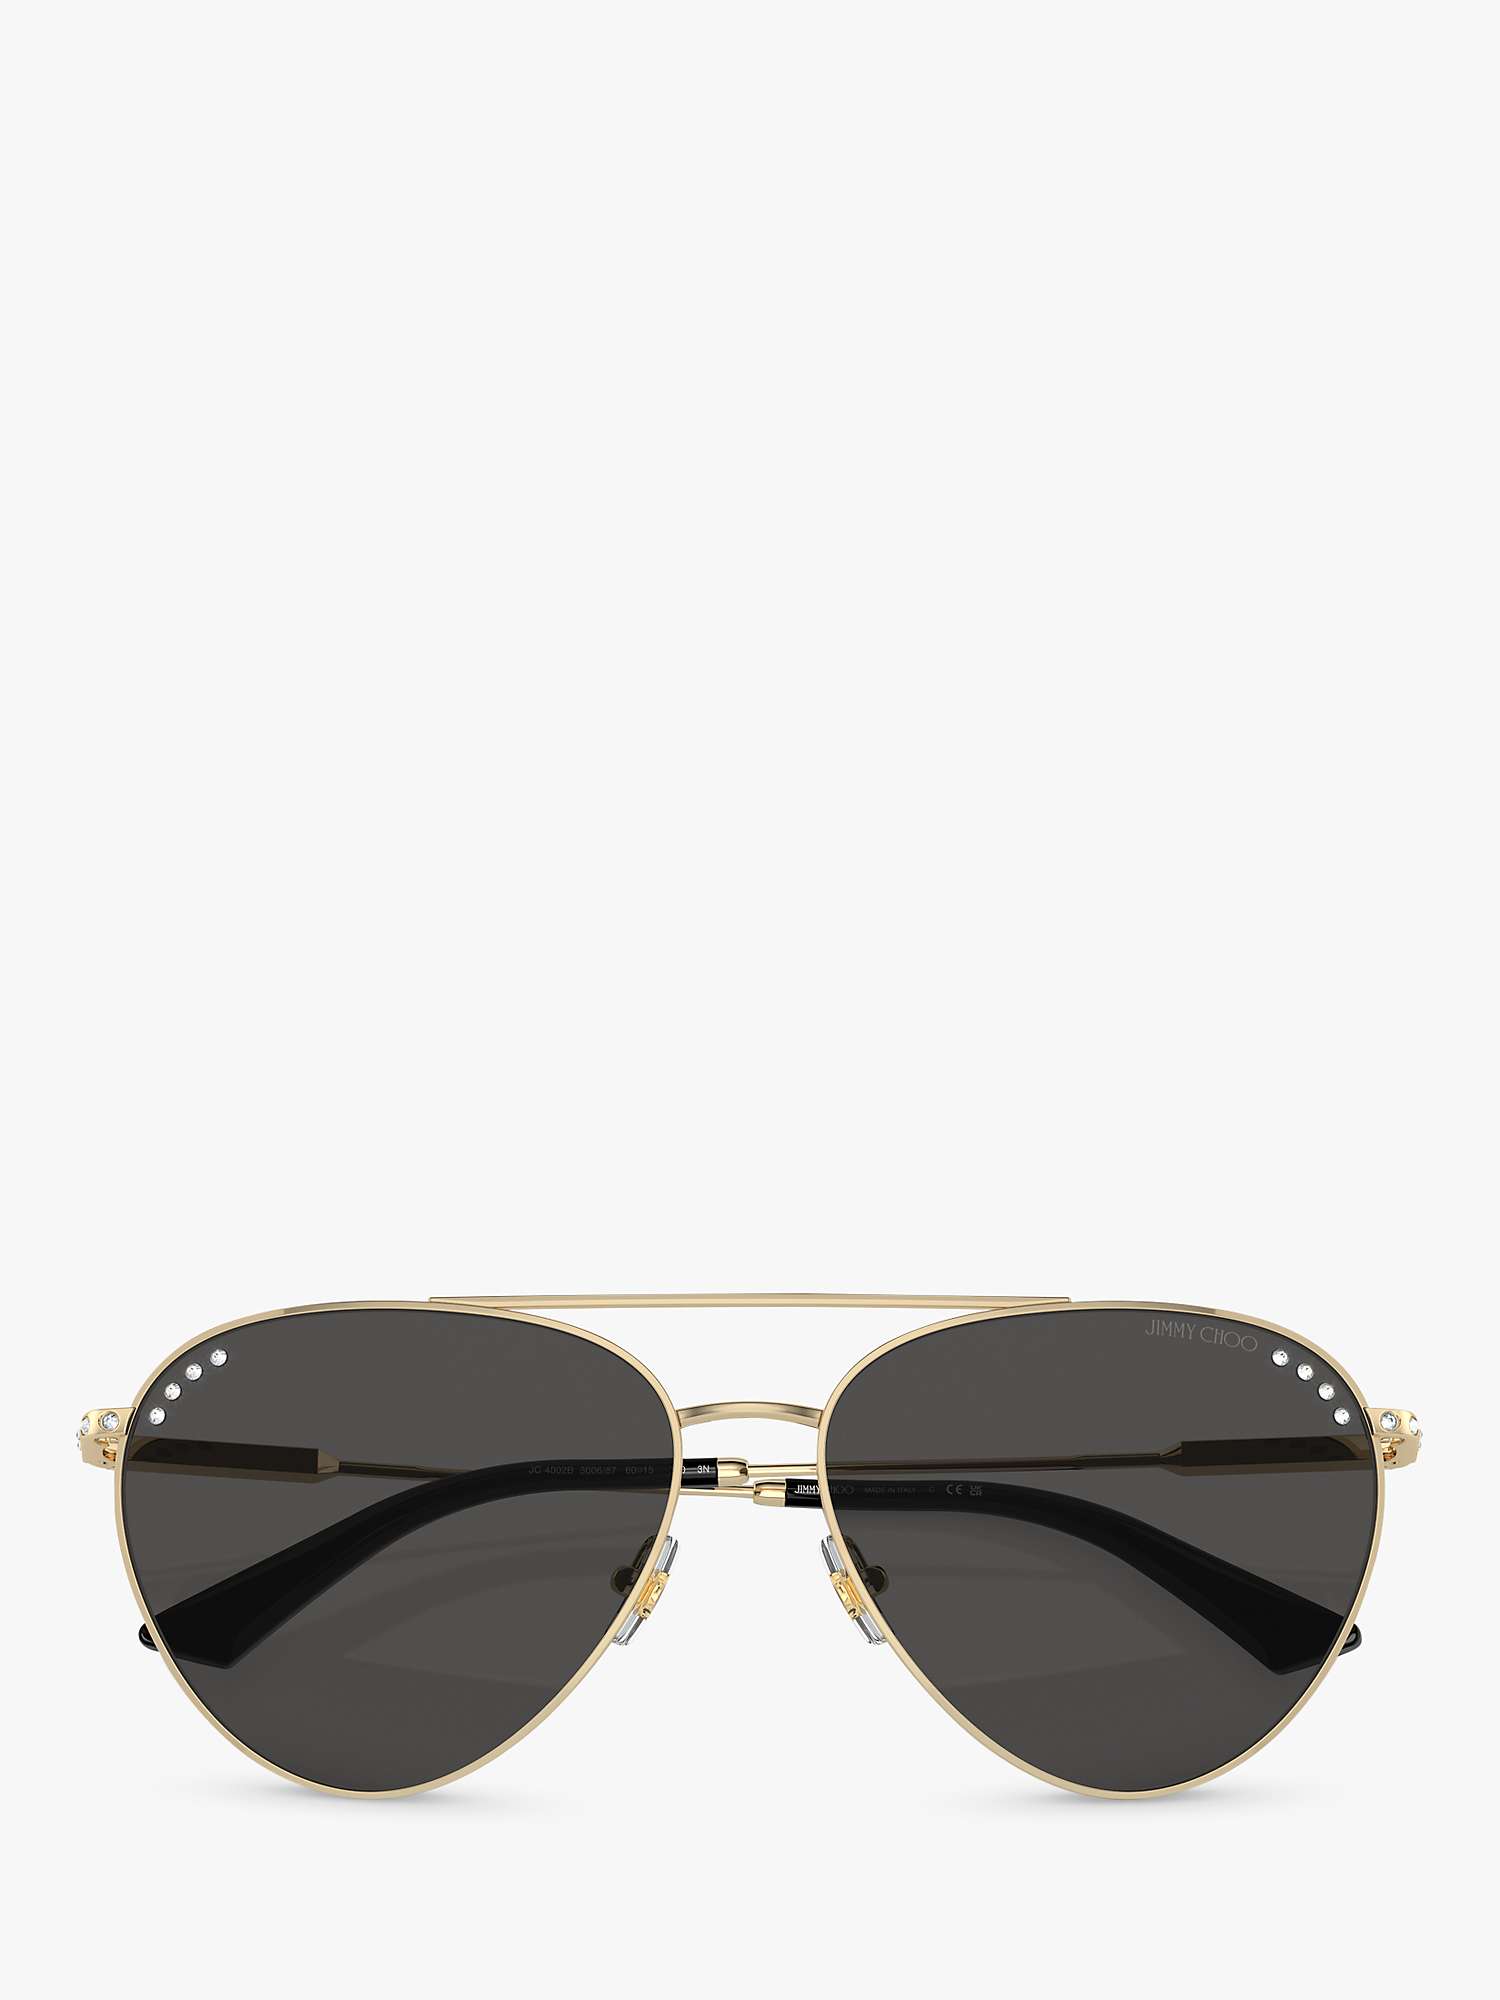 Buy Jimmy Choo JC4002B Women's Aviator Sunglasses, Pale Gold/Grey Online at johnlewis.com